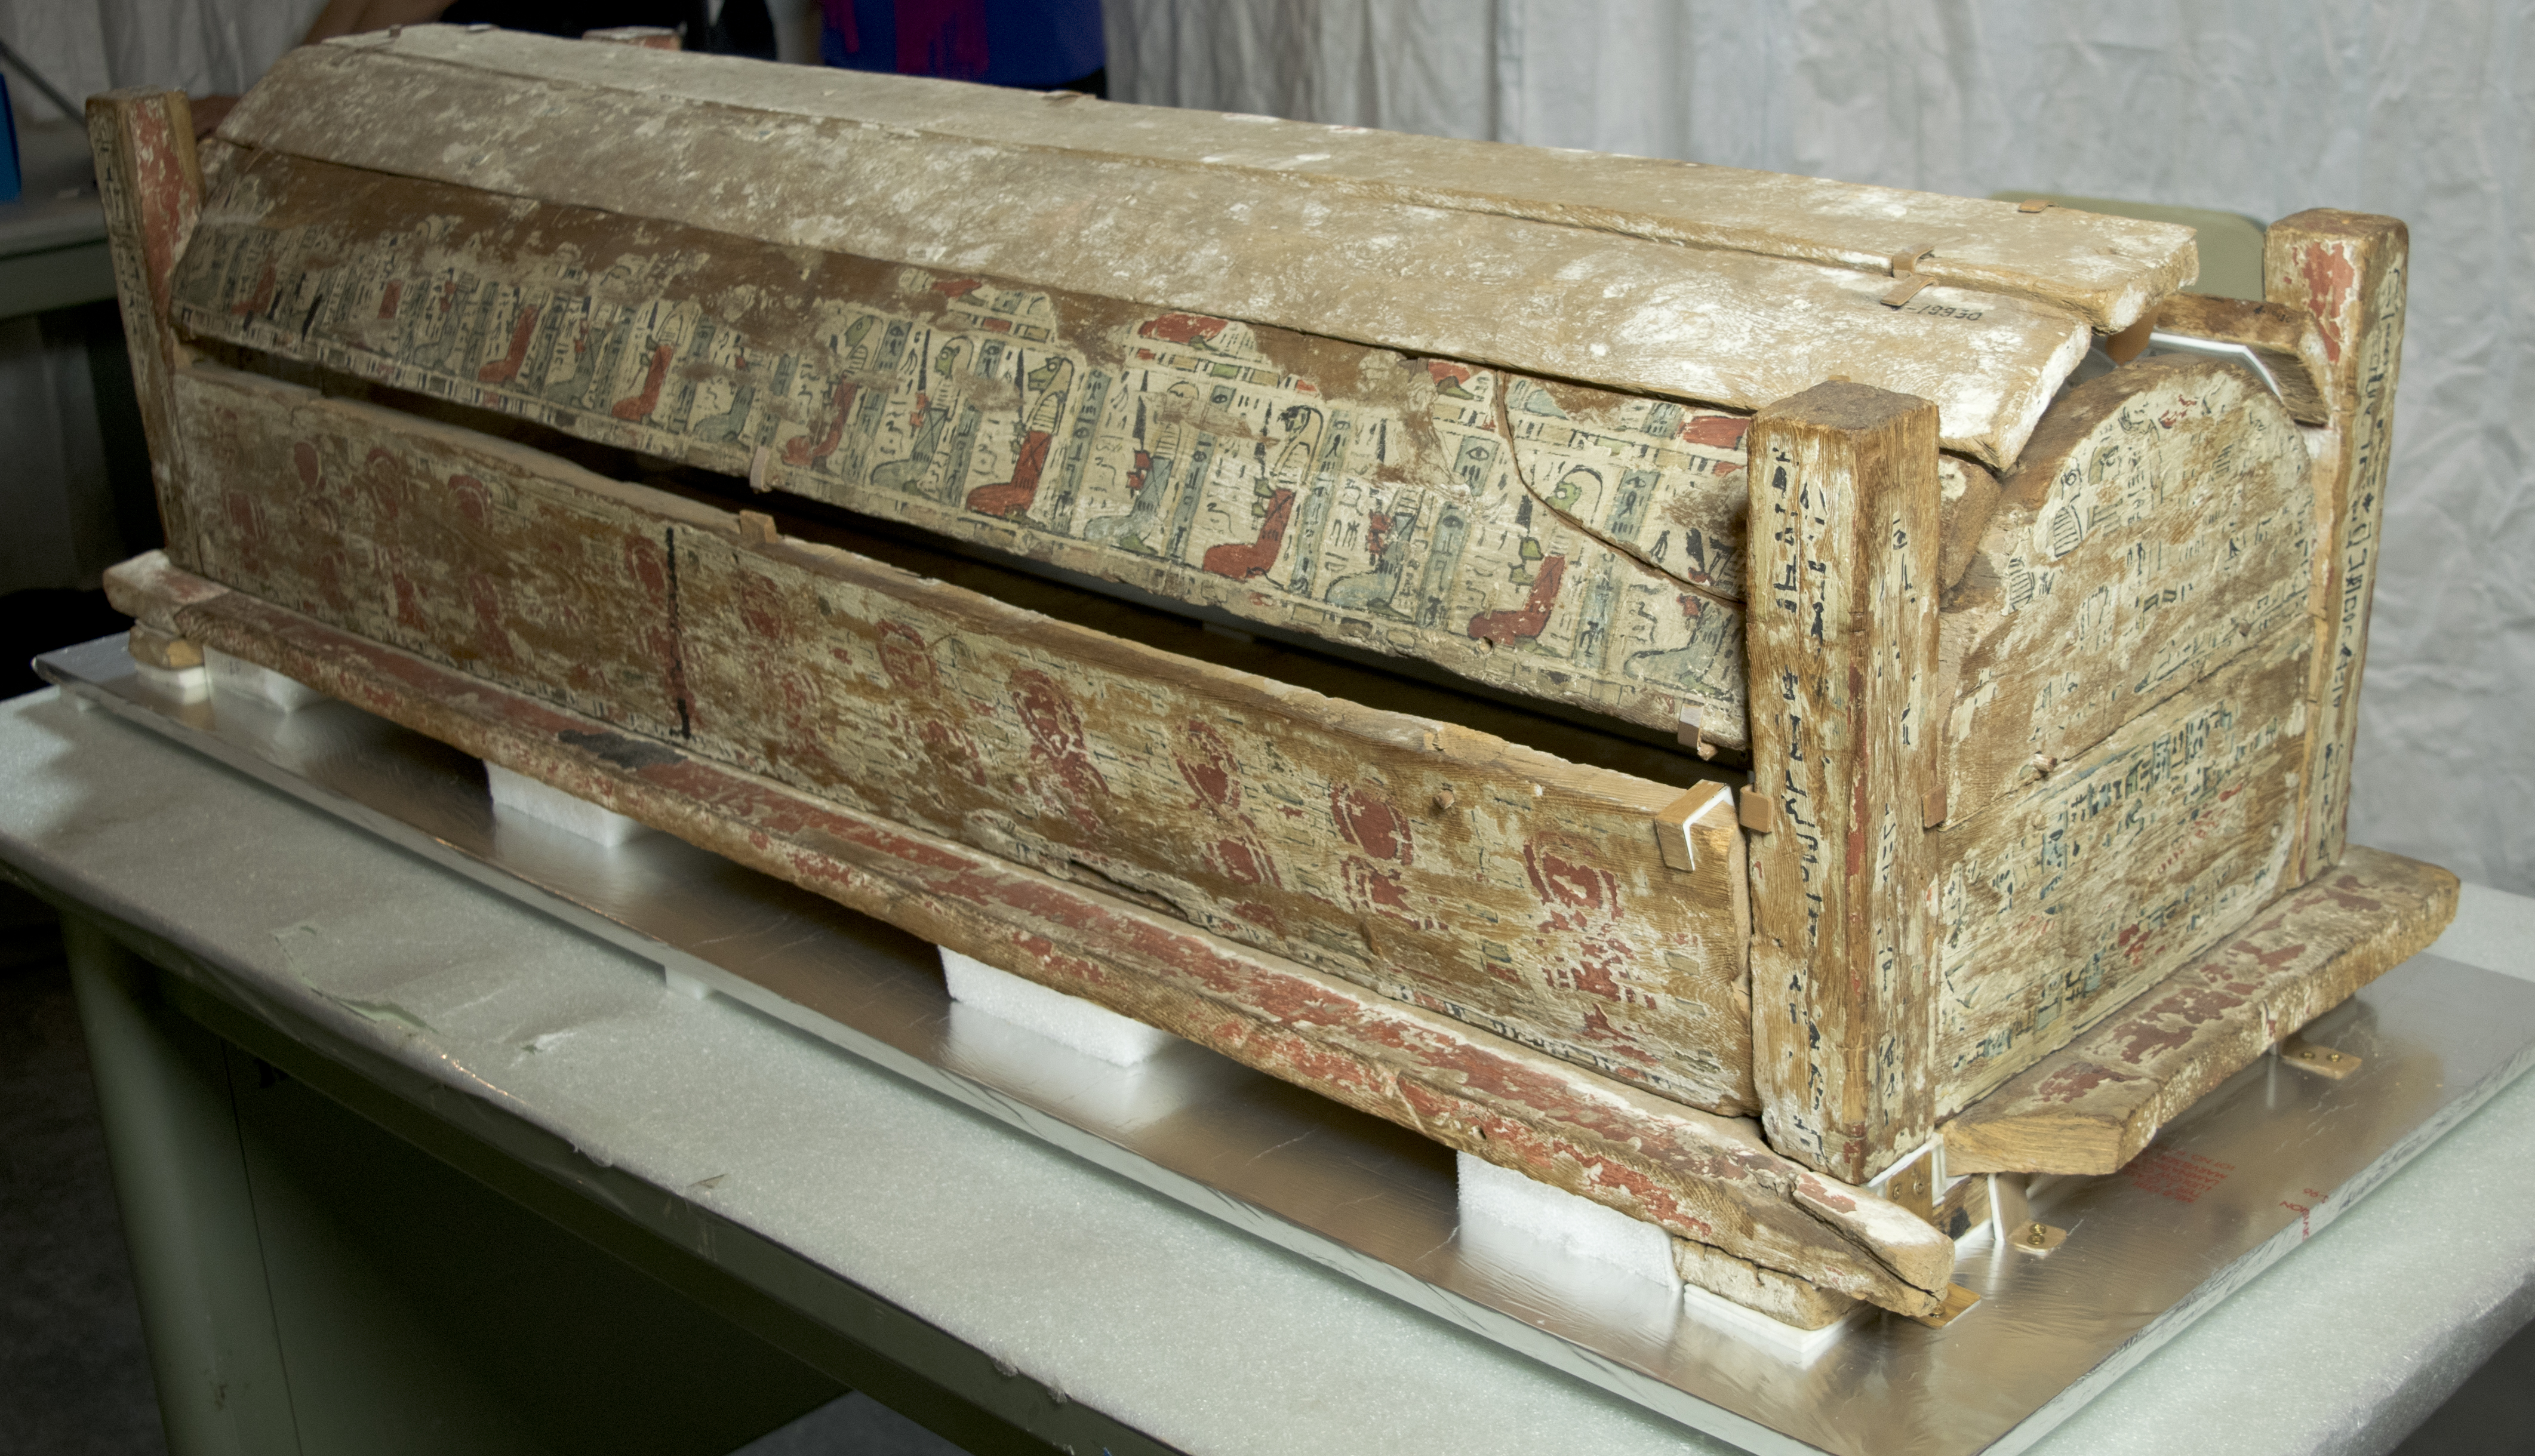 Patjenef's coffin